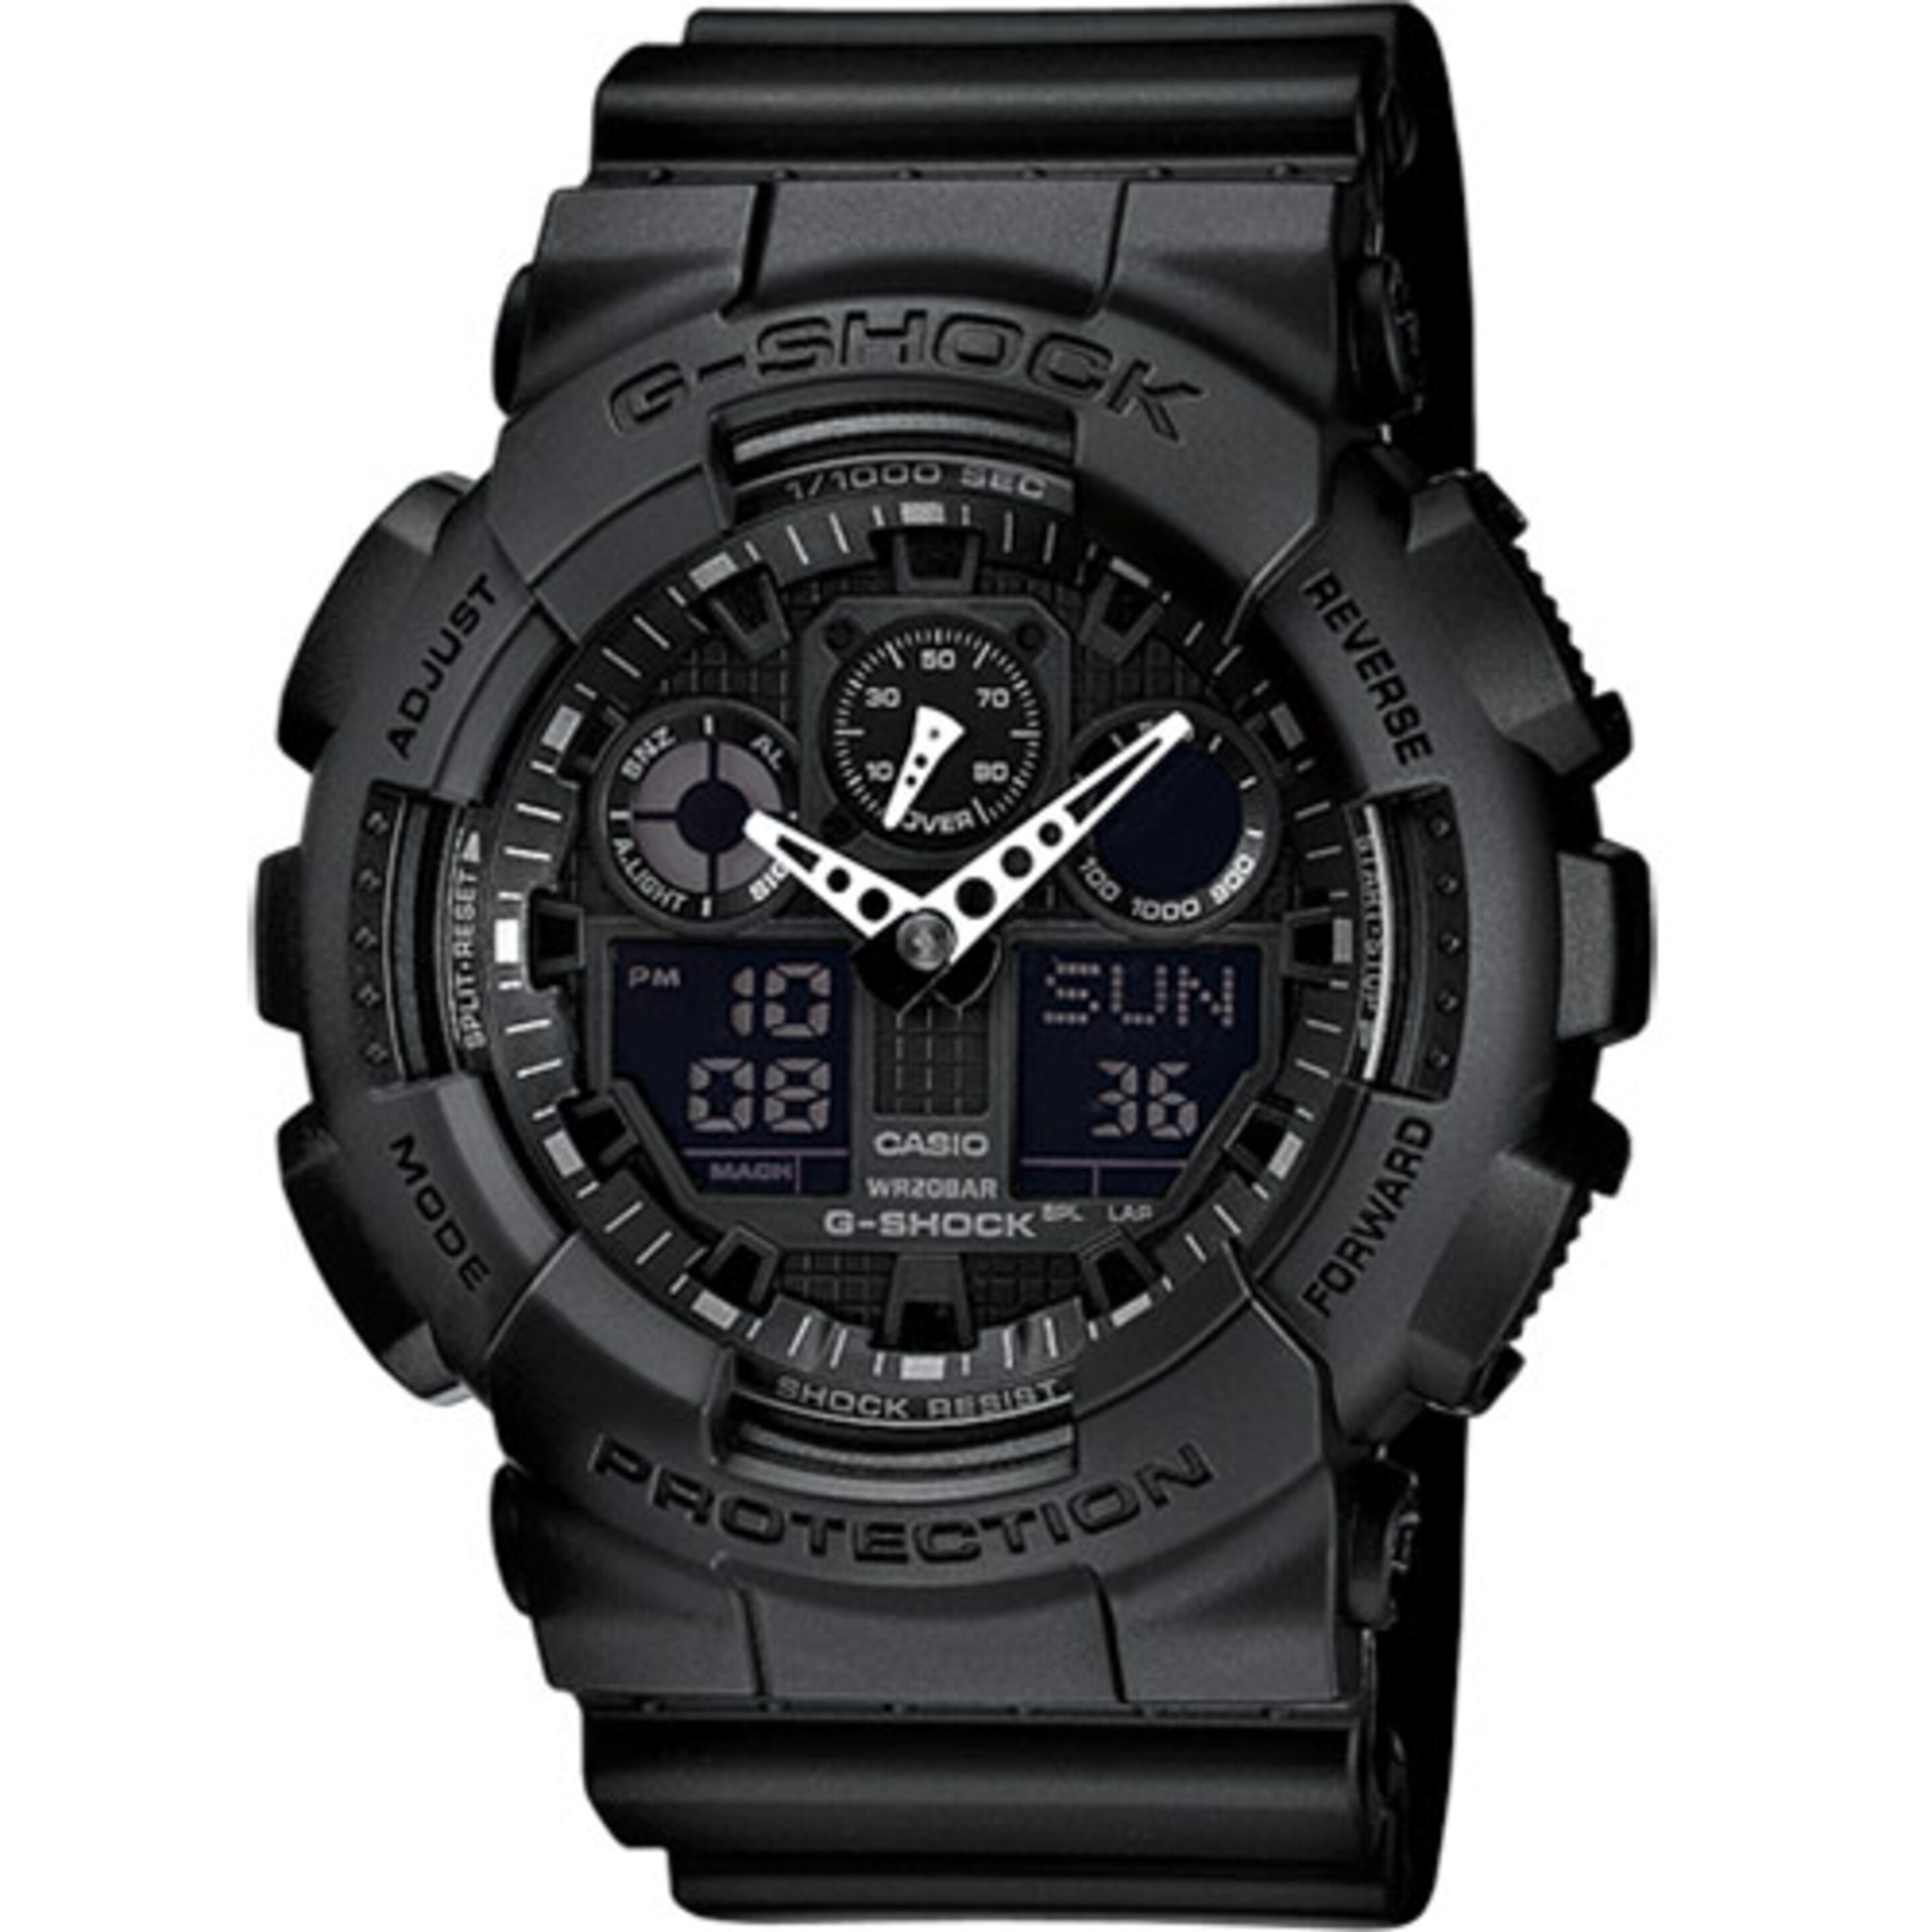 Reloj Casio G-shock Ga-100-1a1er - negro - 